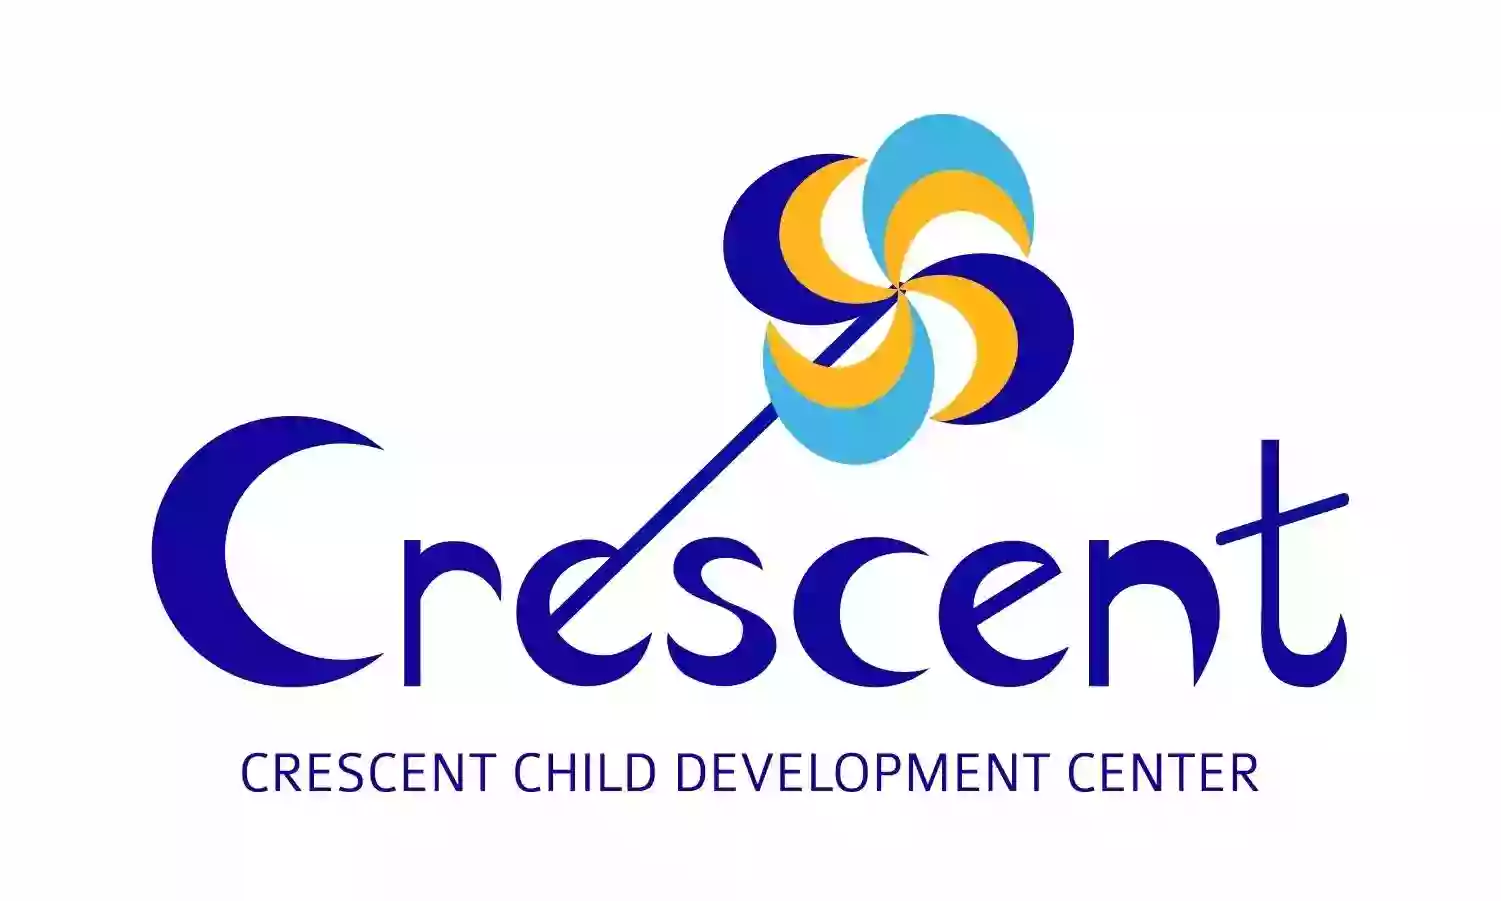 Crescent Child Development Center, LLC